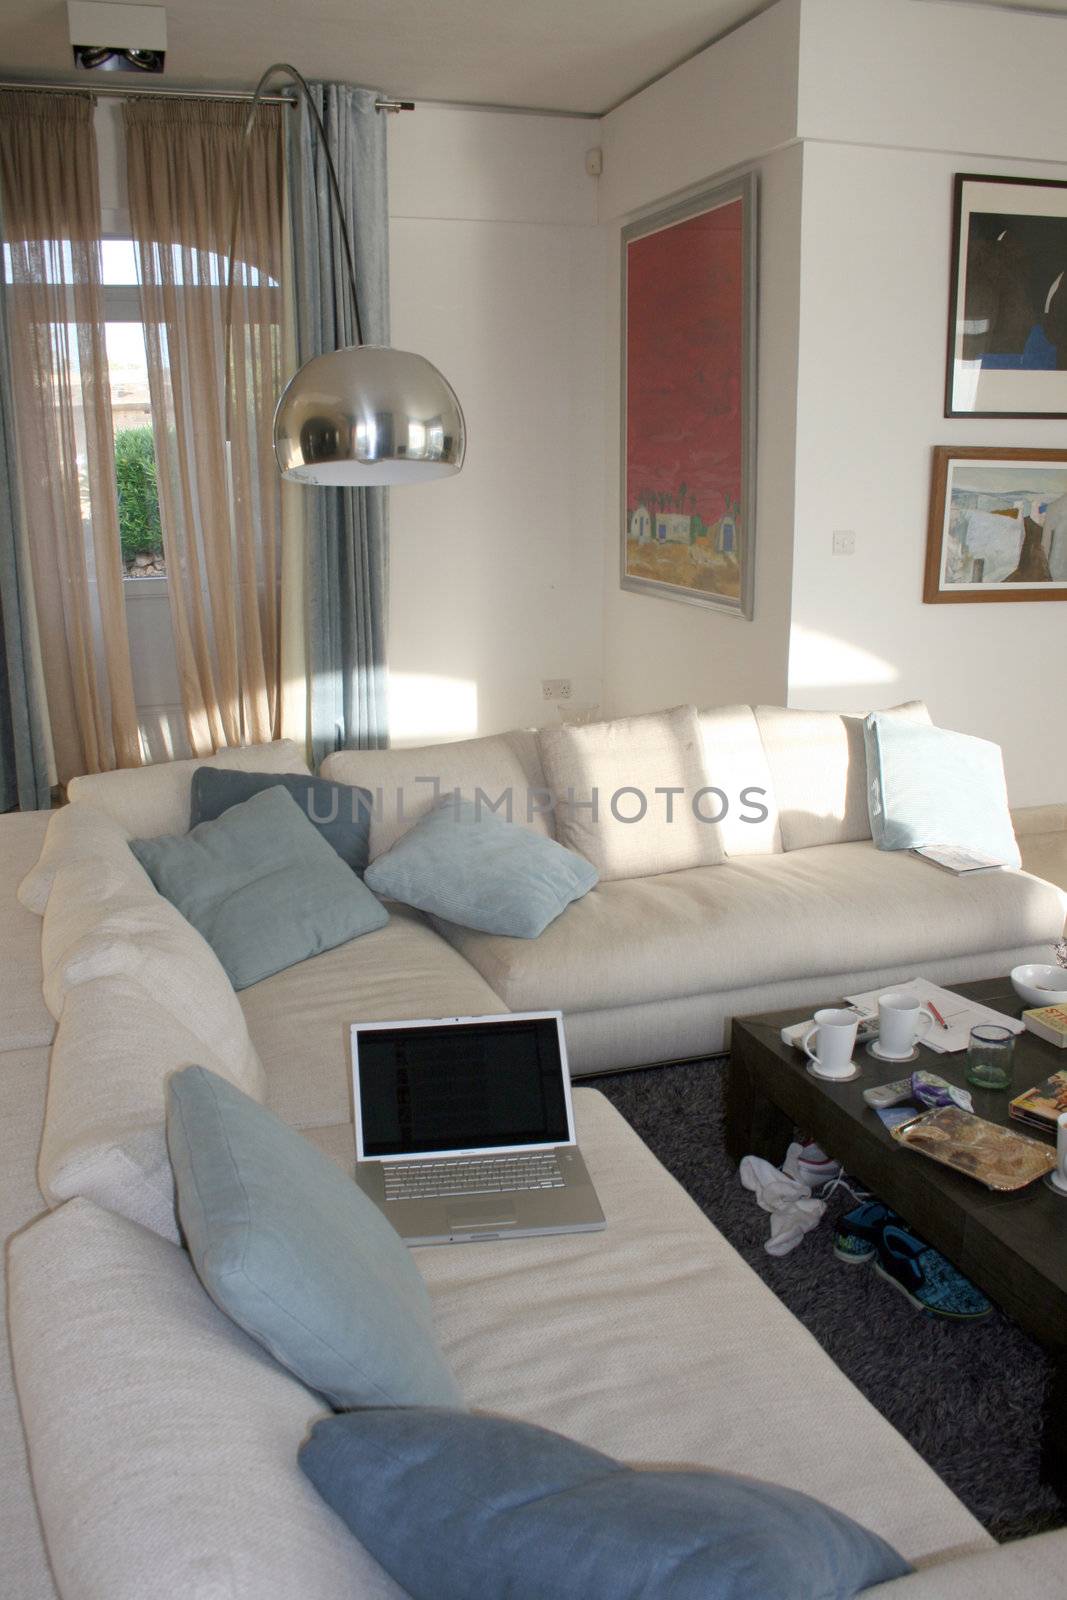 modern attractive living room interior